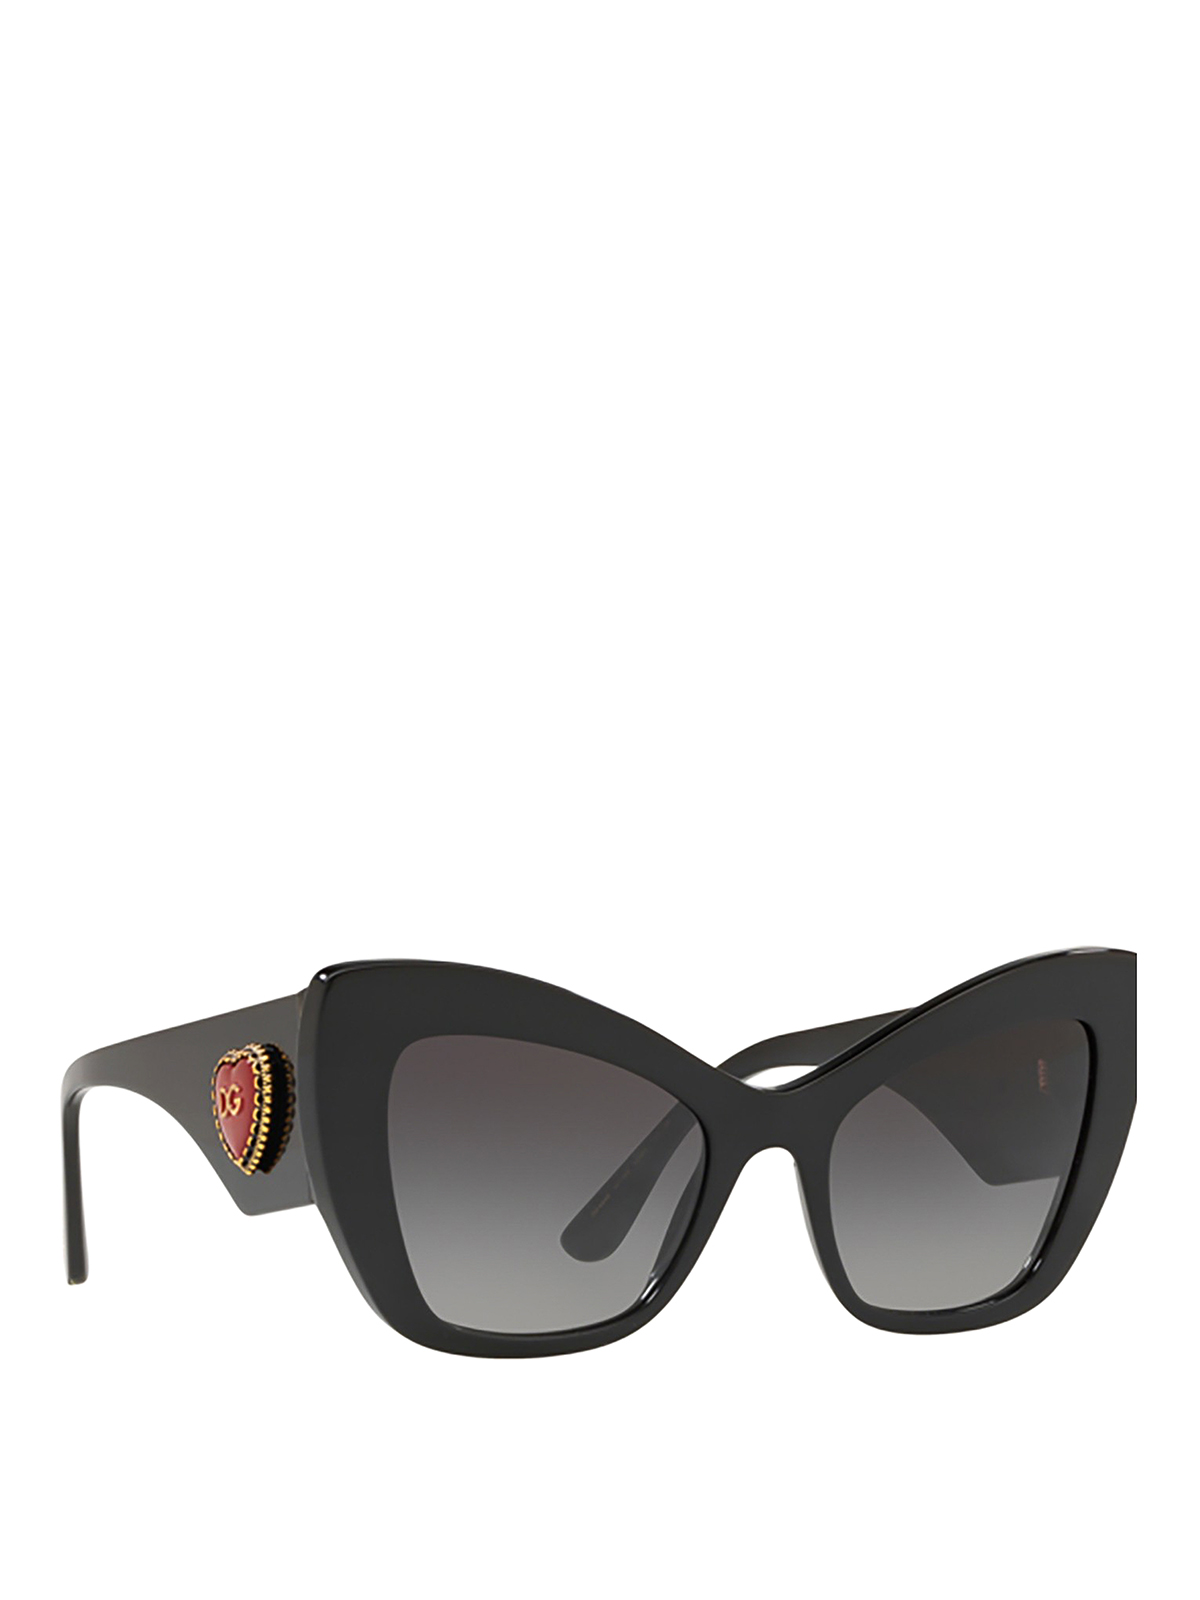 dolce and gabbana black cat eye sunglasses